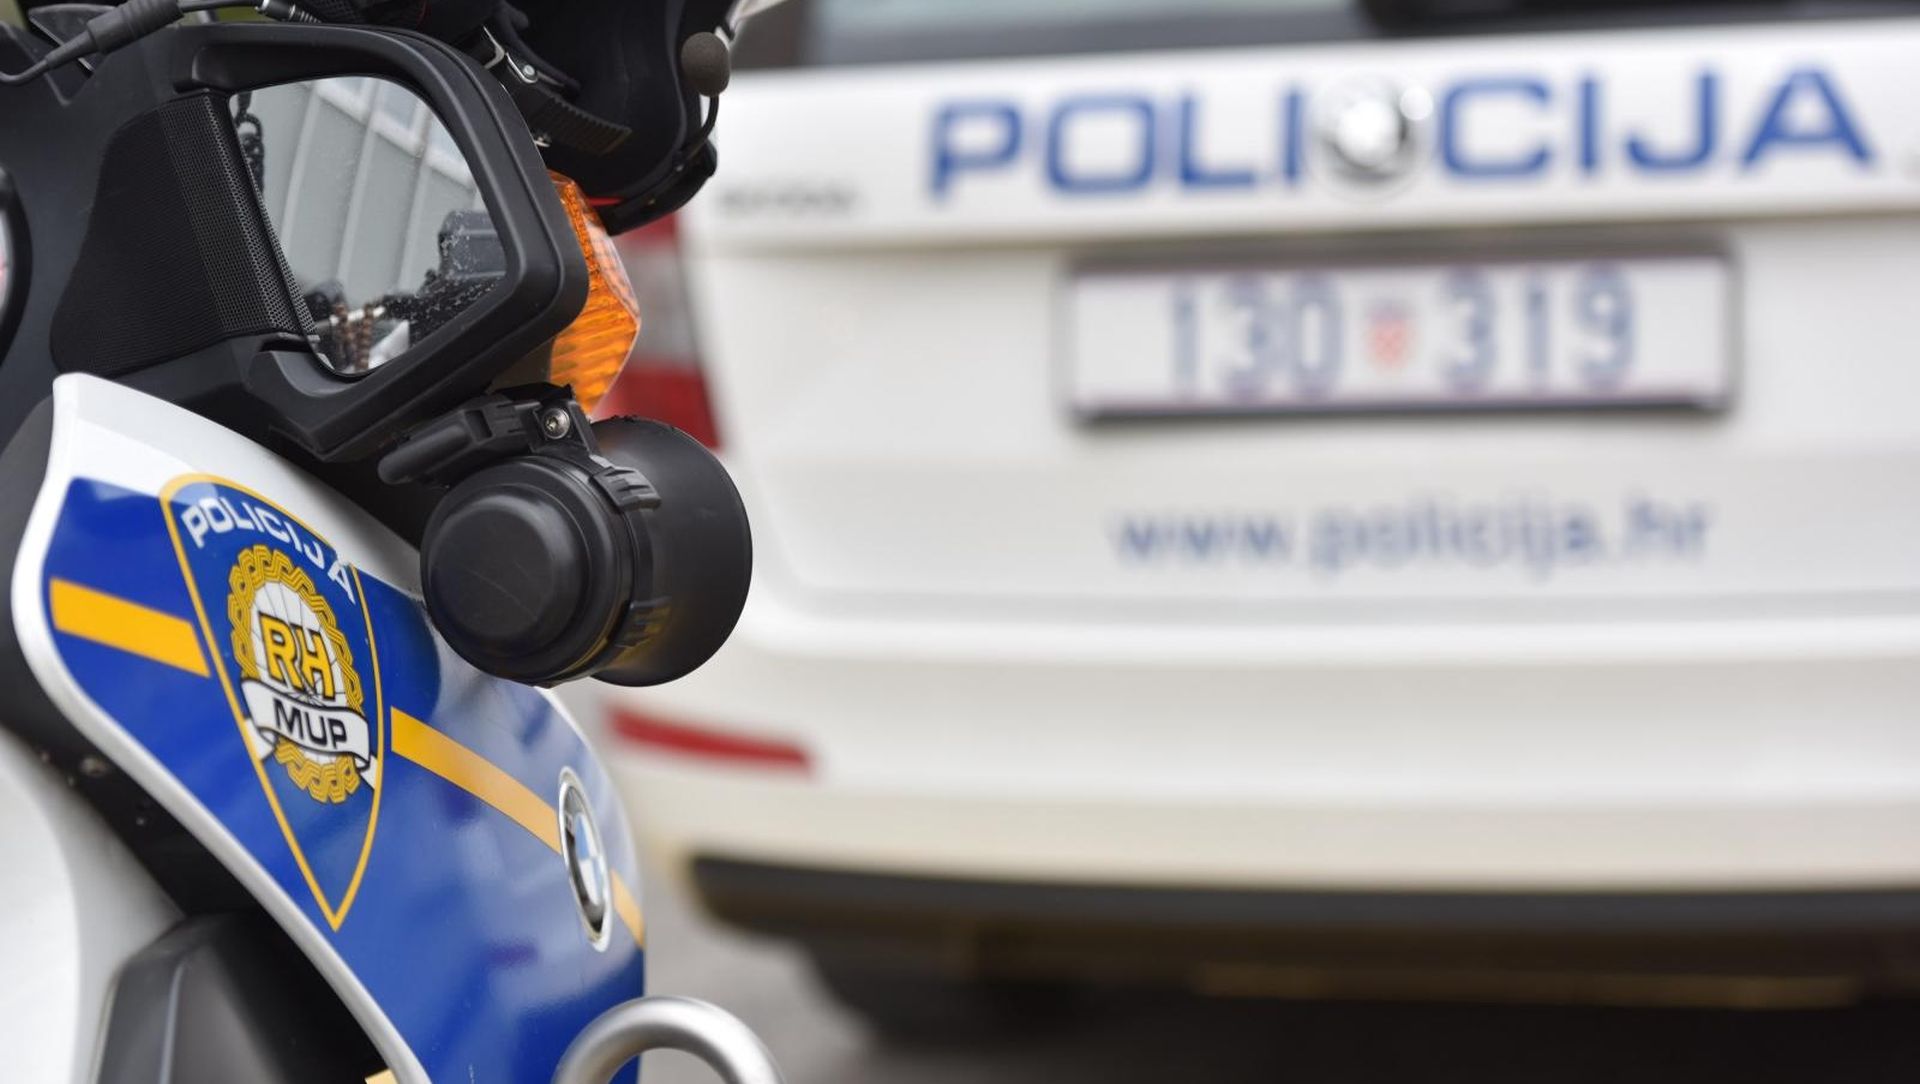 20.03.2017., Sibenik -
Policijske oznake na sluzbenim vozilima.
Photo: Hrvoje Jelavic/PIXSELL